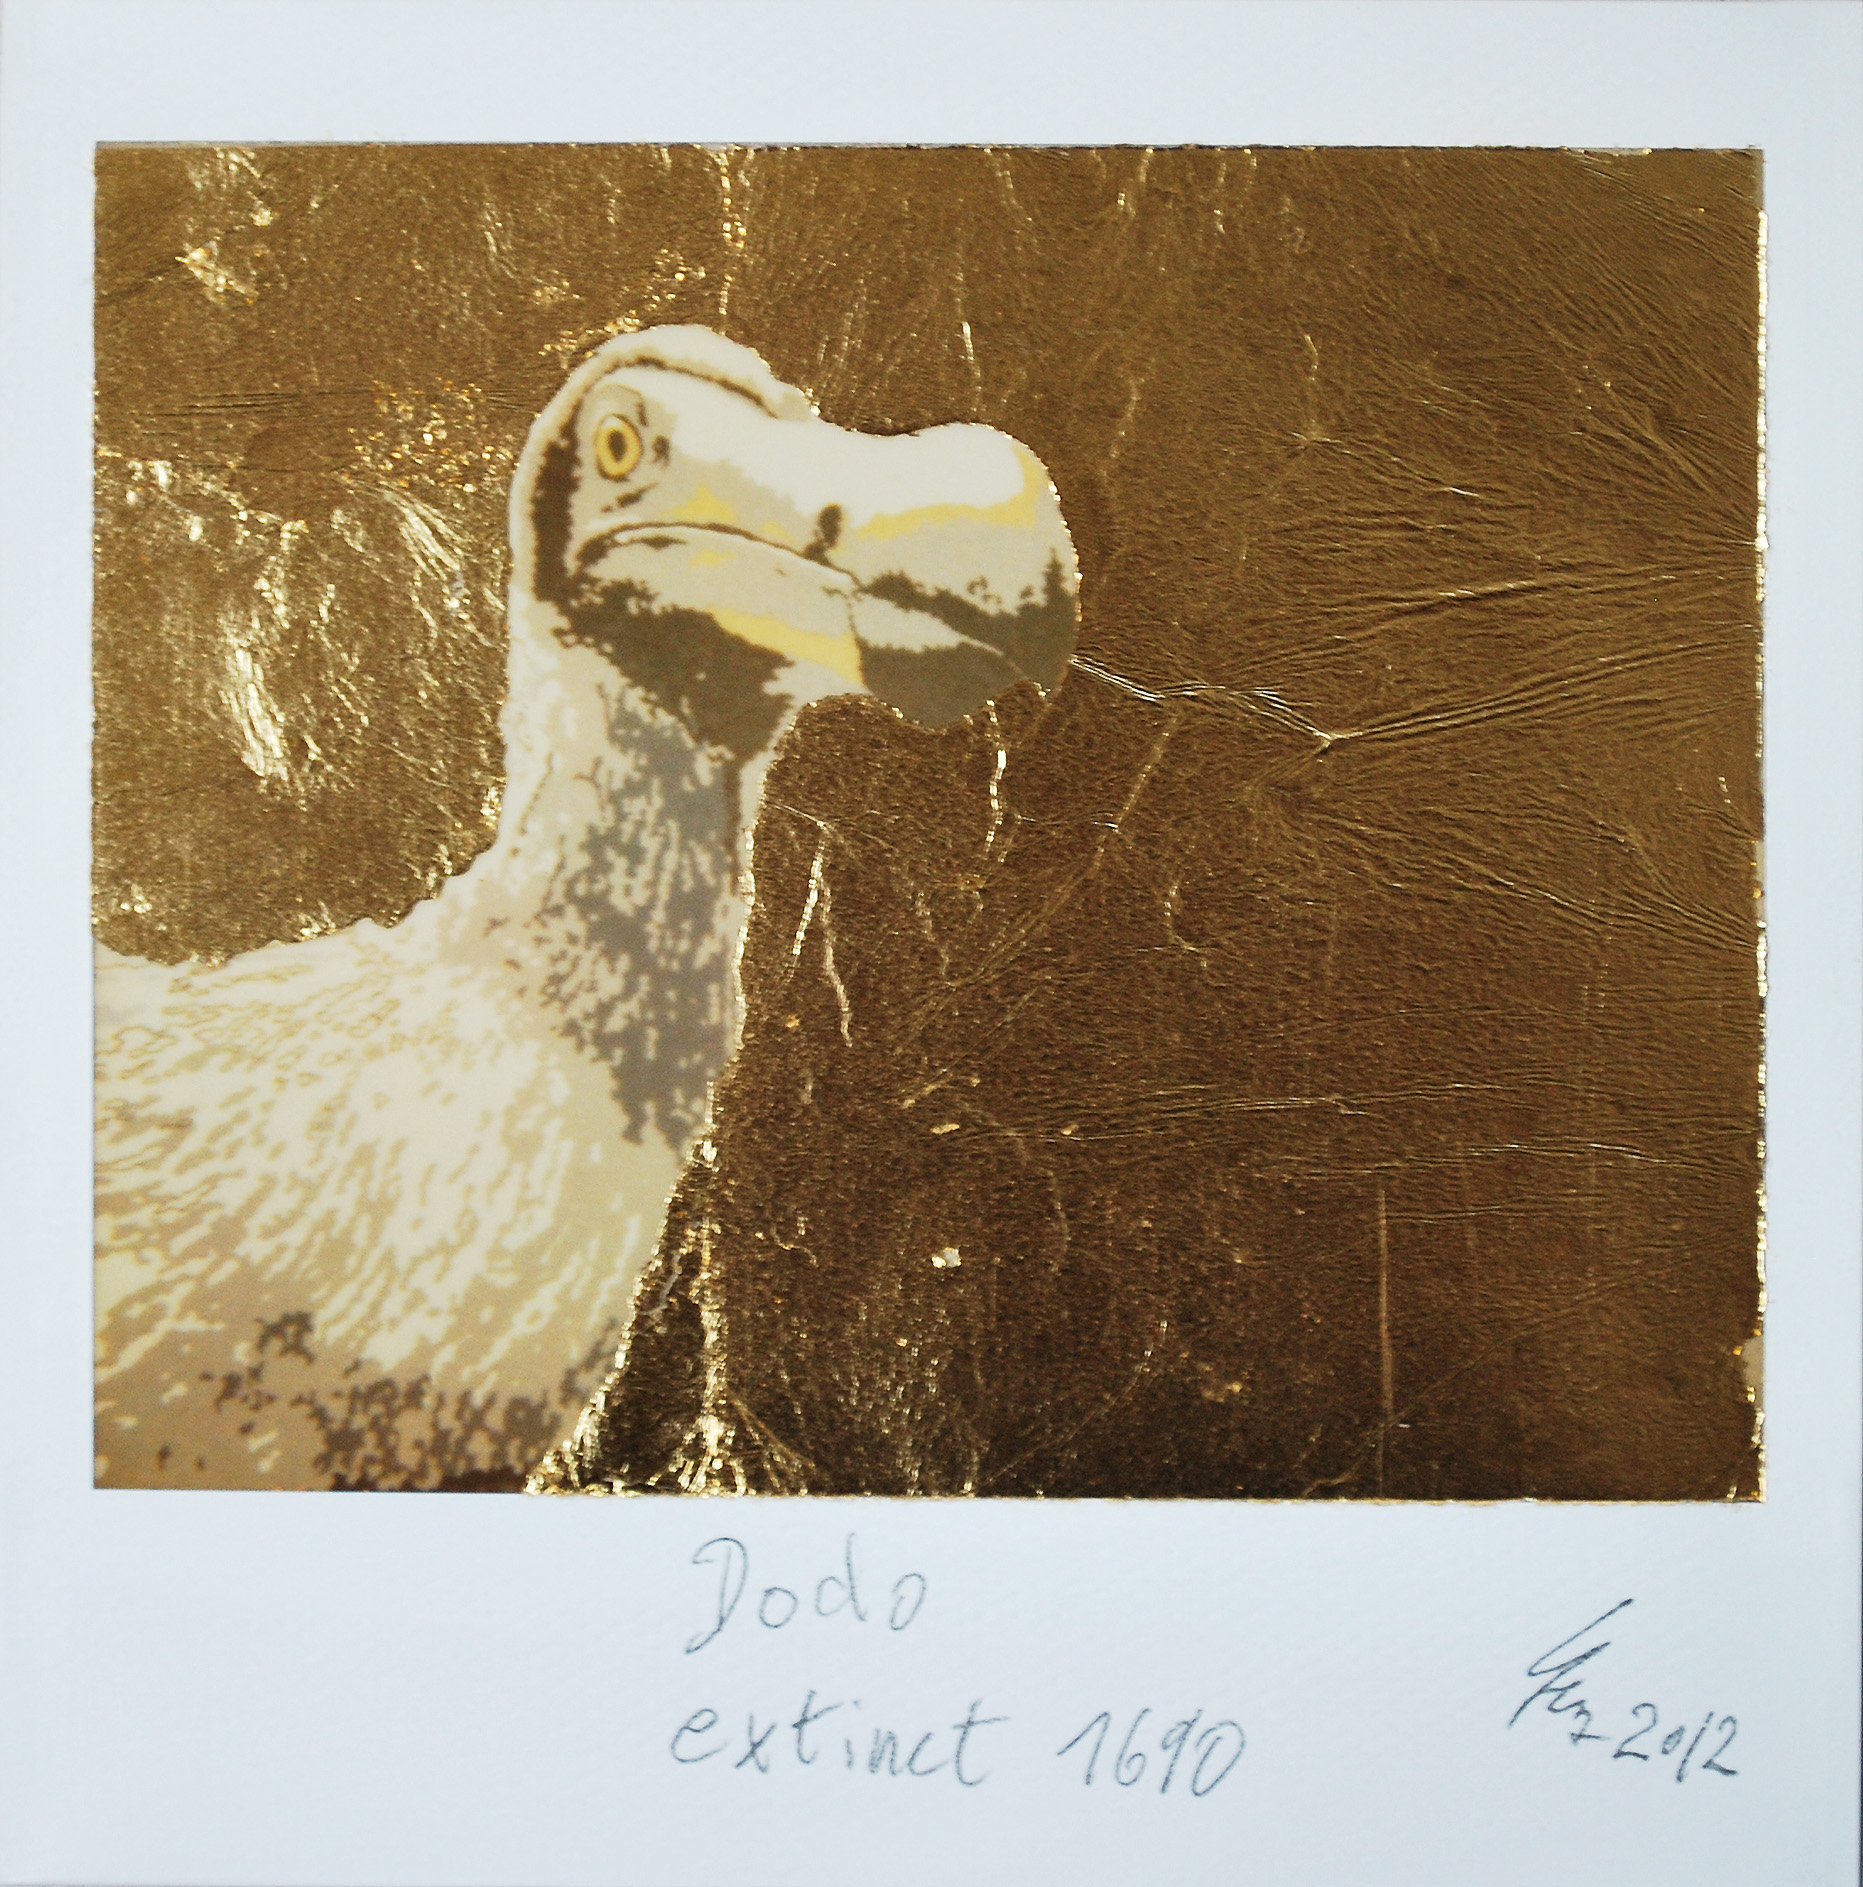 Dodo extinct 1690, Foto: Polaroid, Blattgold 23 Karat, 2012